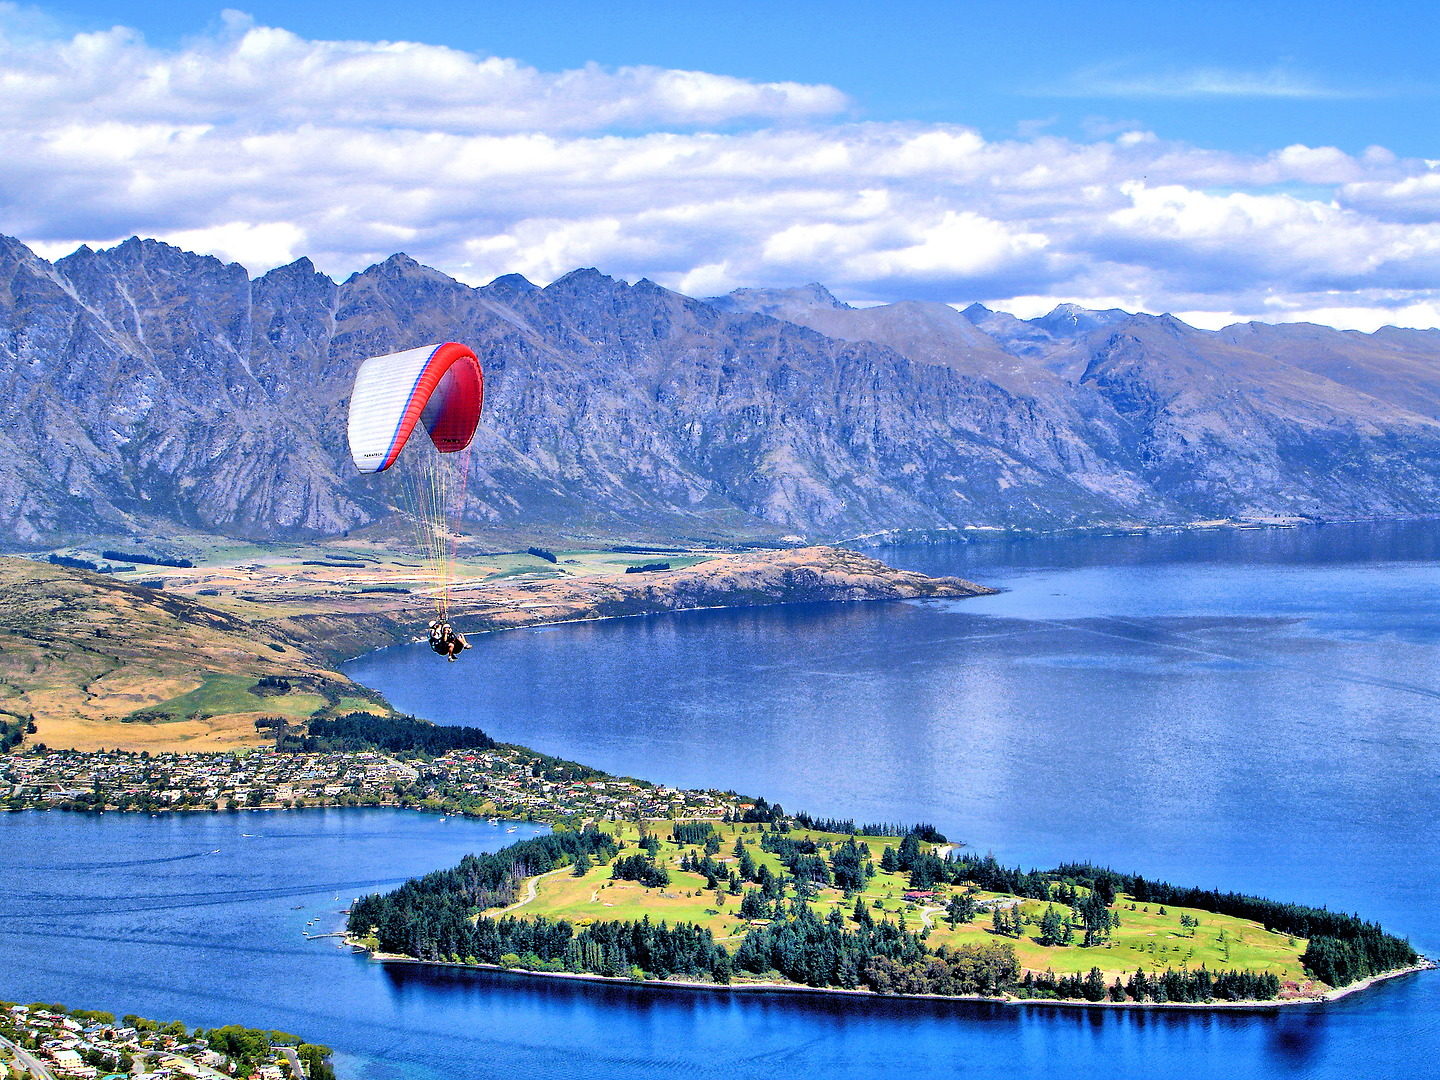 New-Zealand-Queenstown-Lake-Wakatipu-Paragliding-1440x1080.jpg